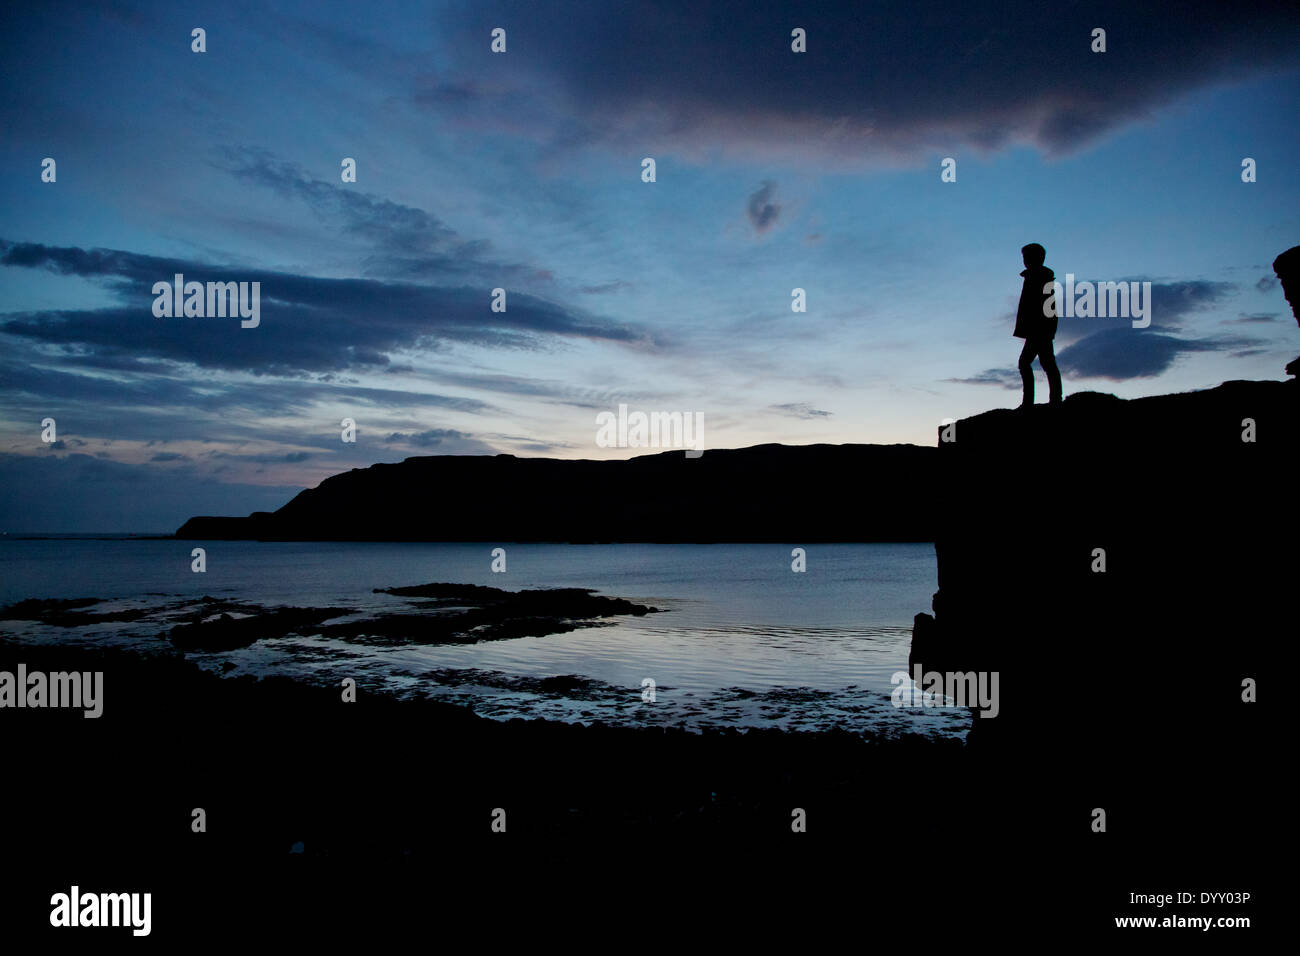 Boy stands on boulder silhouetted,evening light,Calgary bay at dusk,  sle of Mull, Argyle,Hebrides,Scottish Highlands,Scotland Stock Photo